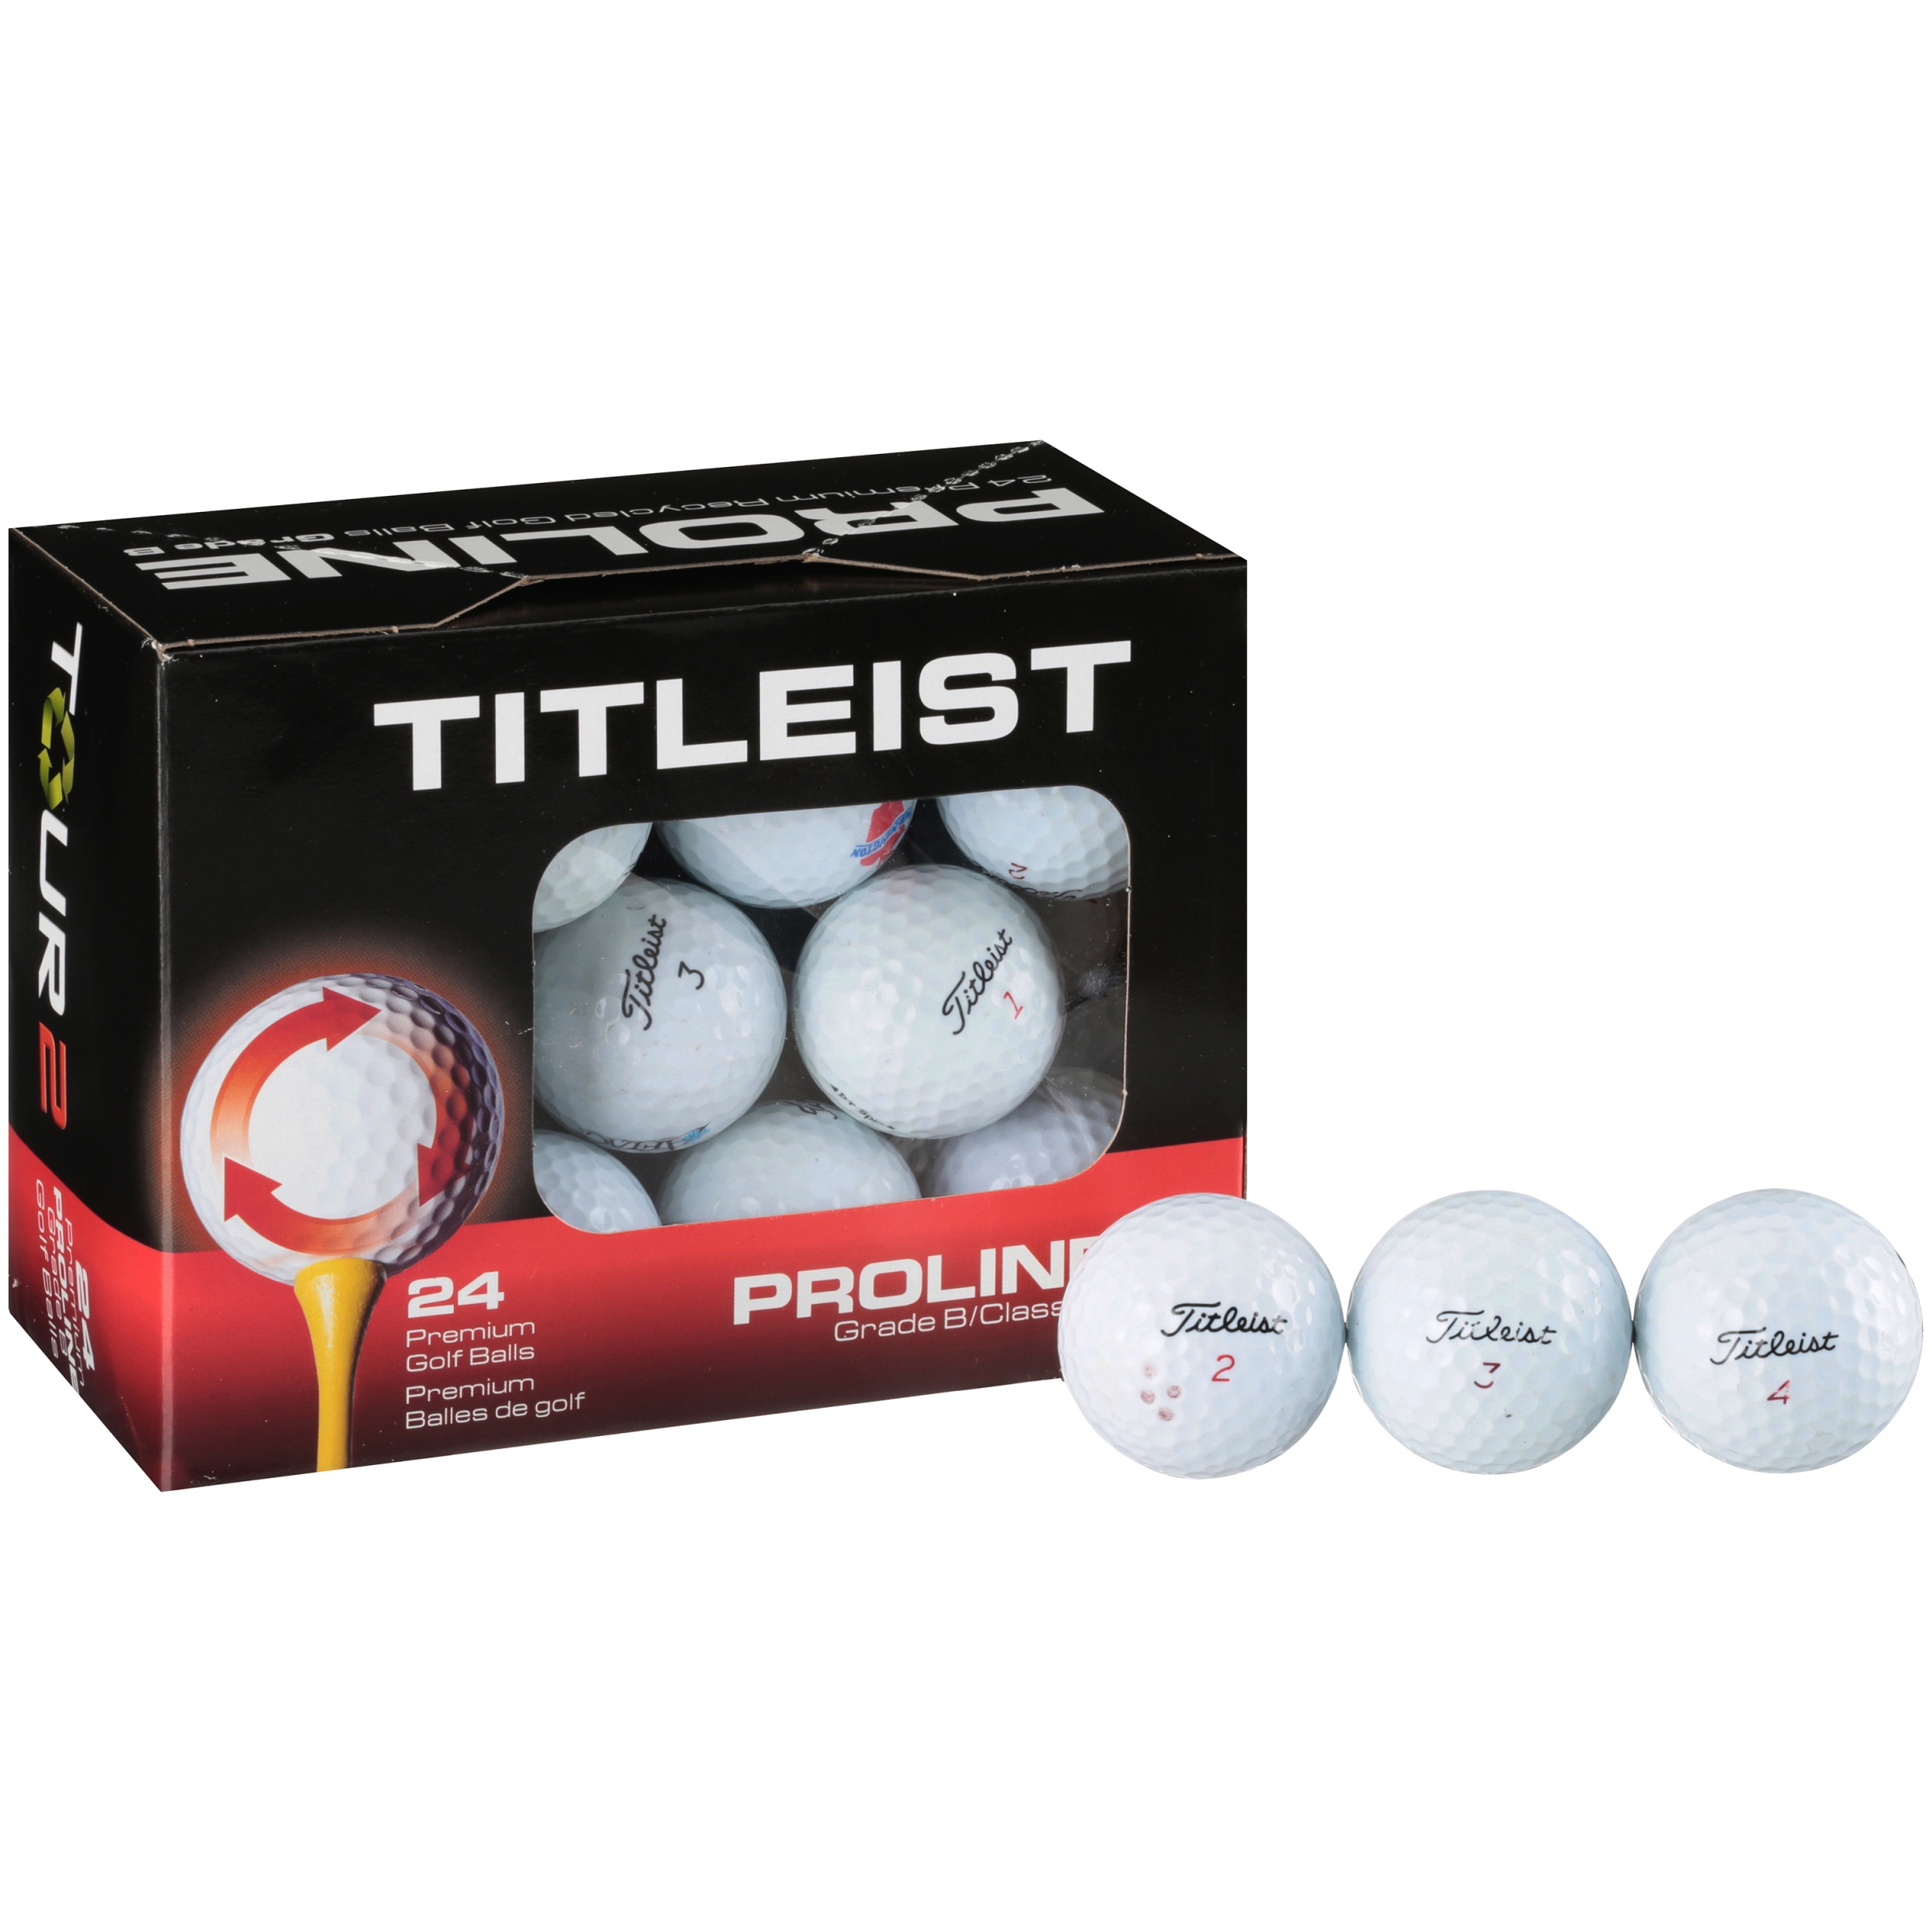 Titleist Proline Golf Balls, 24 Pack - image 1 of 9